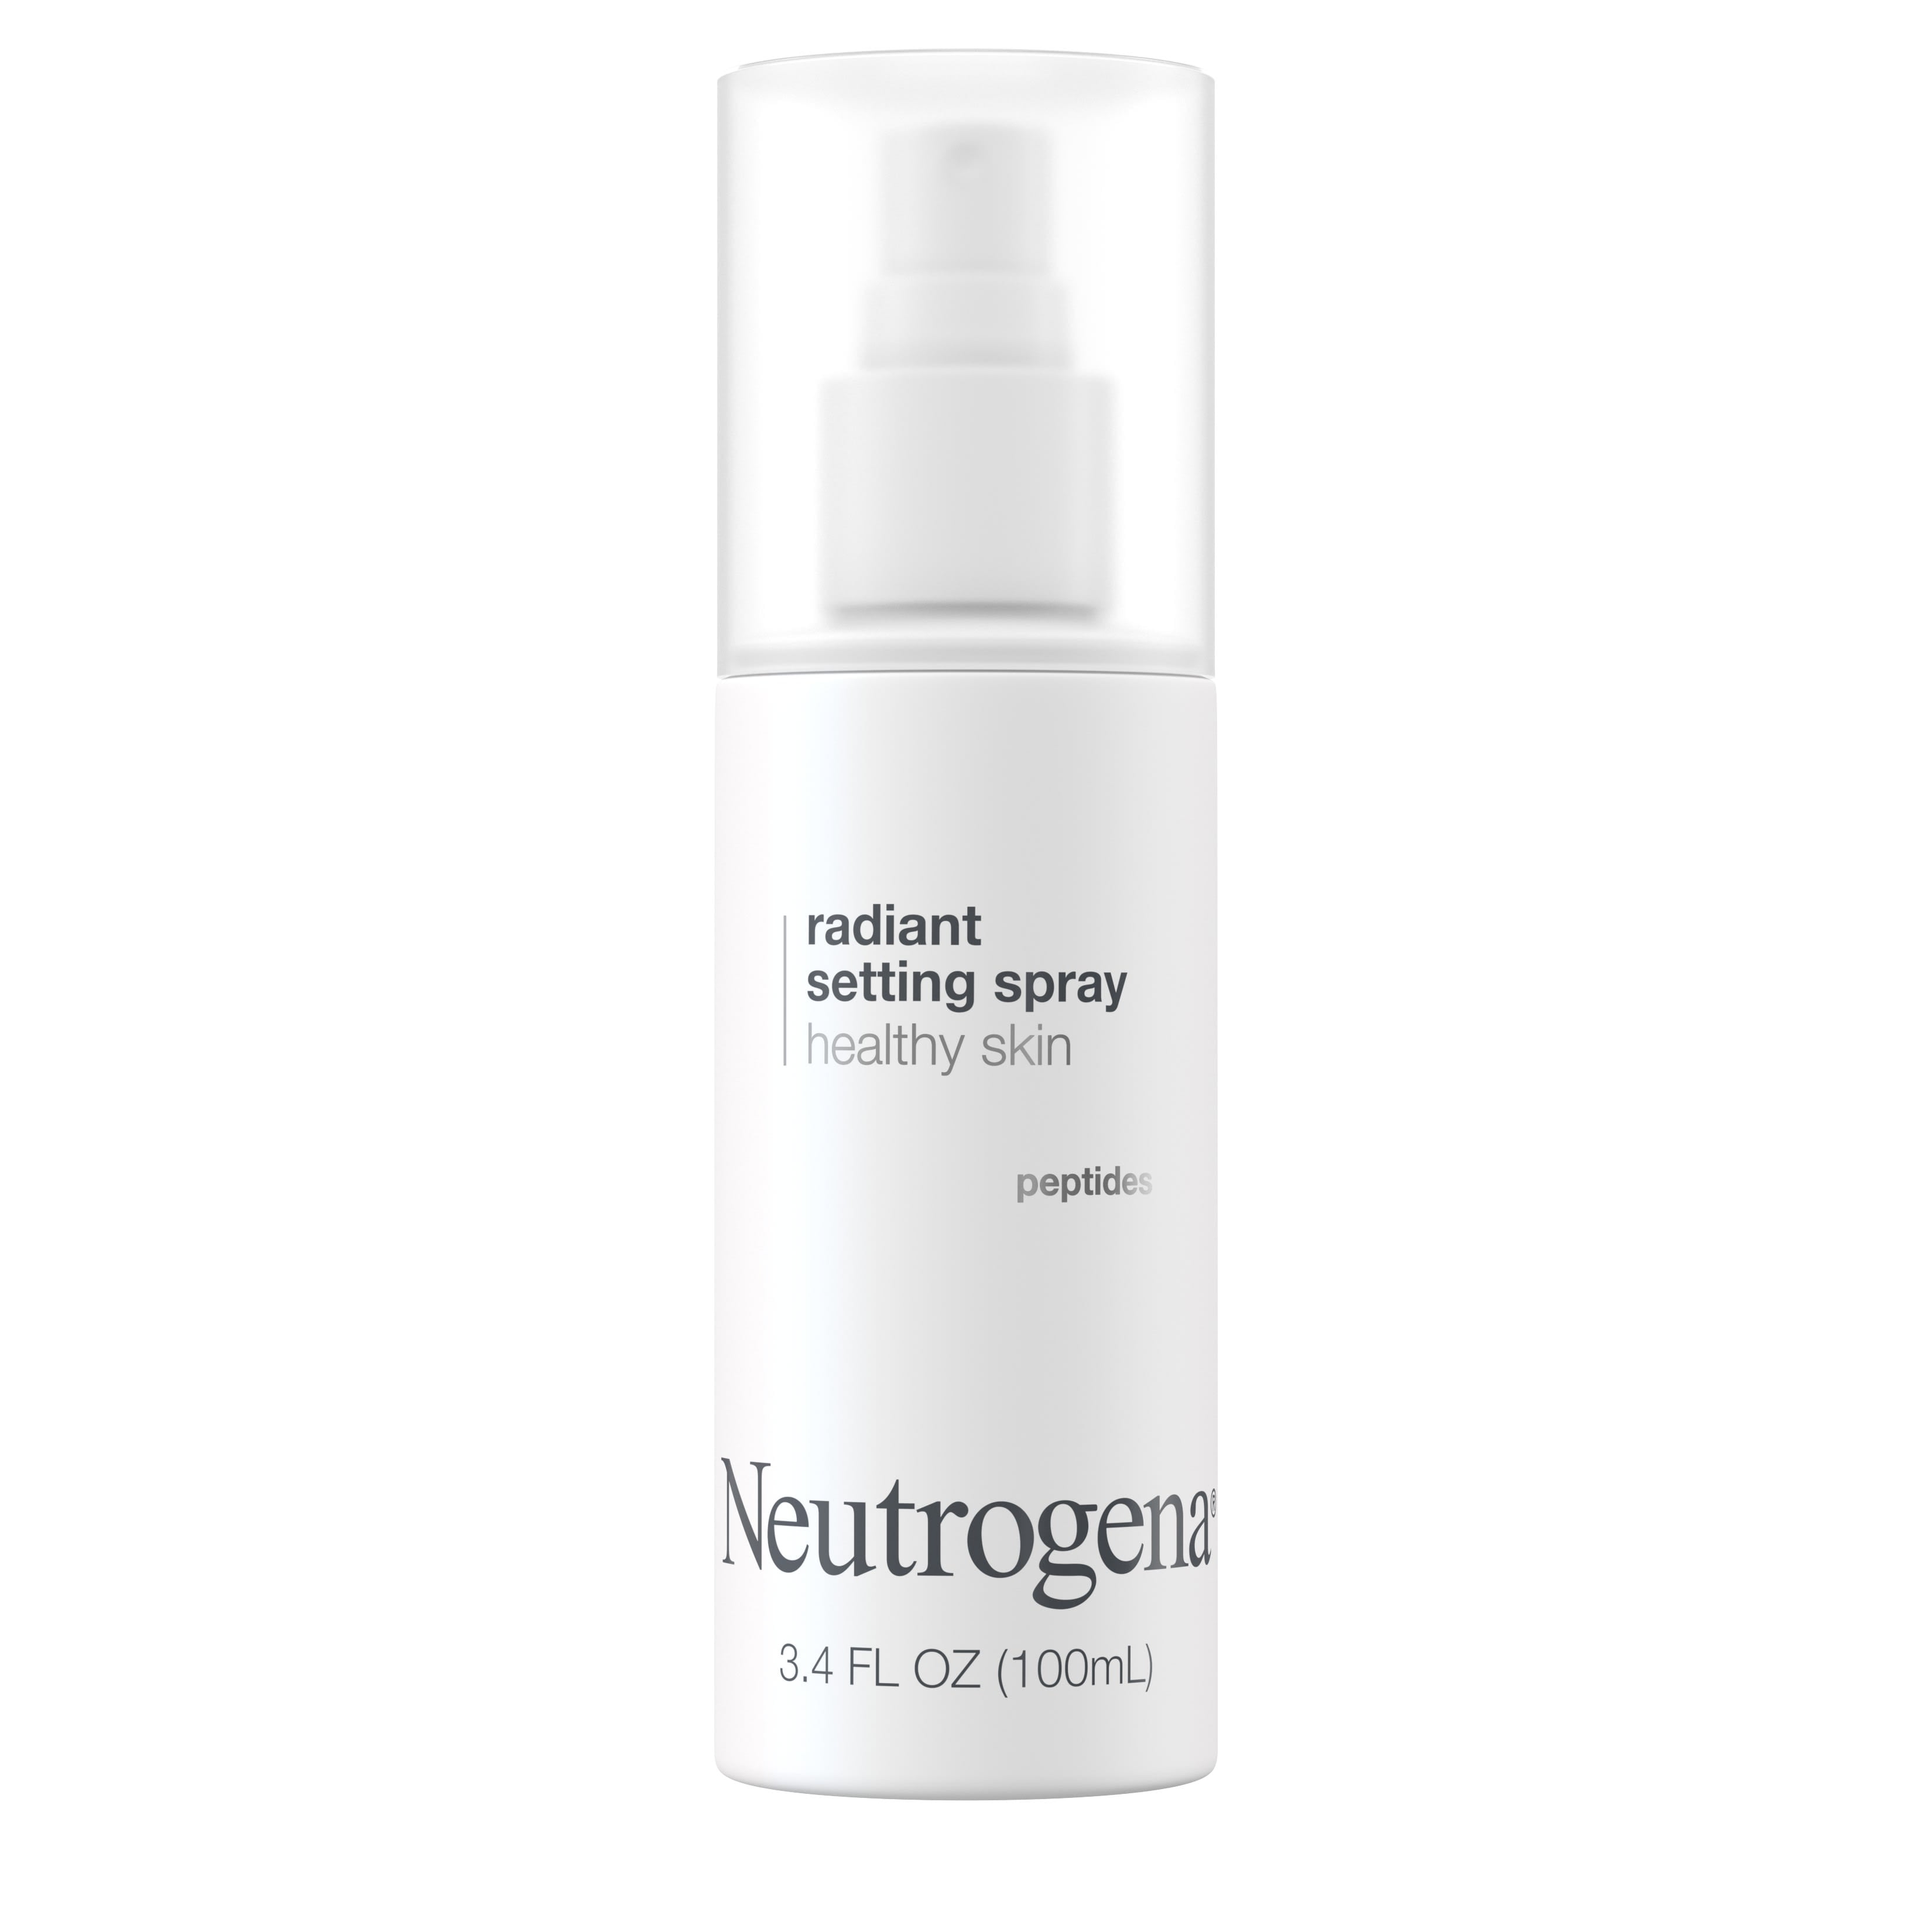 Neutrogena Radiant Makeup Setting Spray with Peptides, 3.4 fl. oz